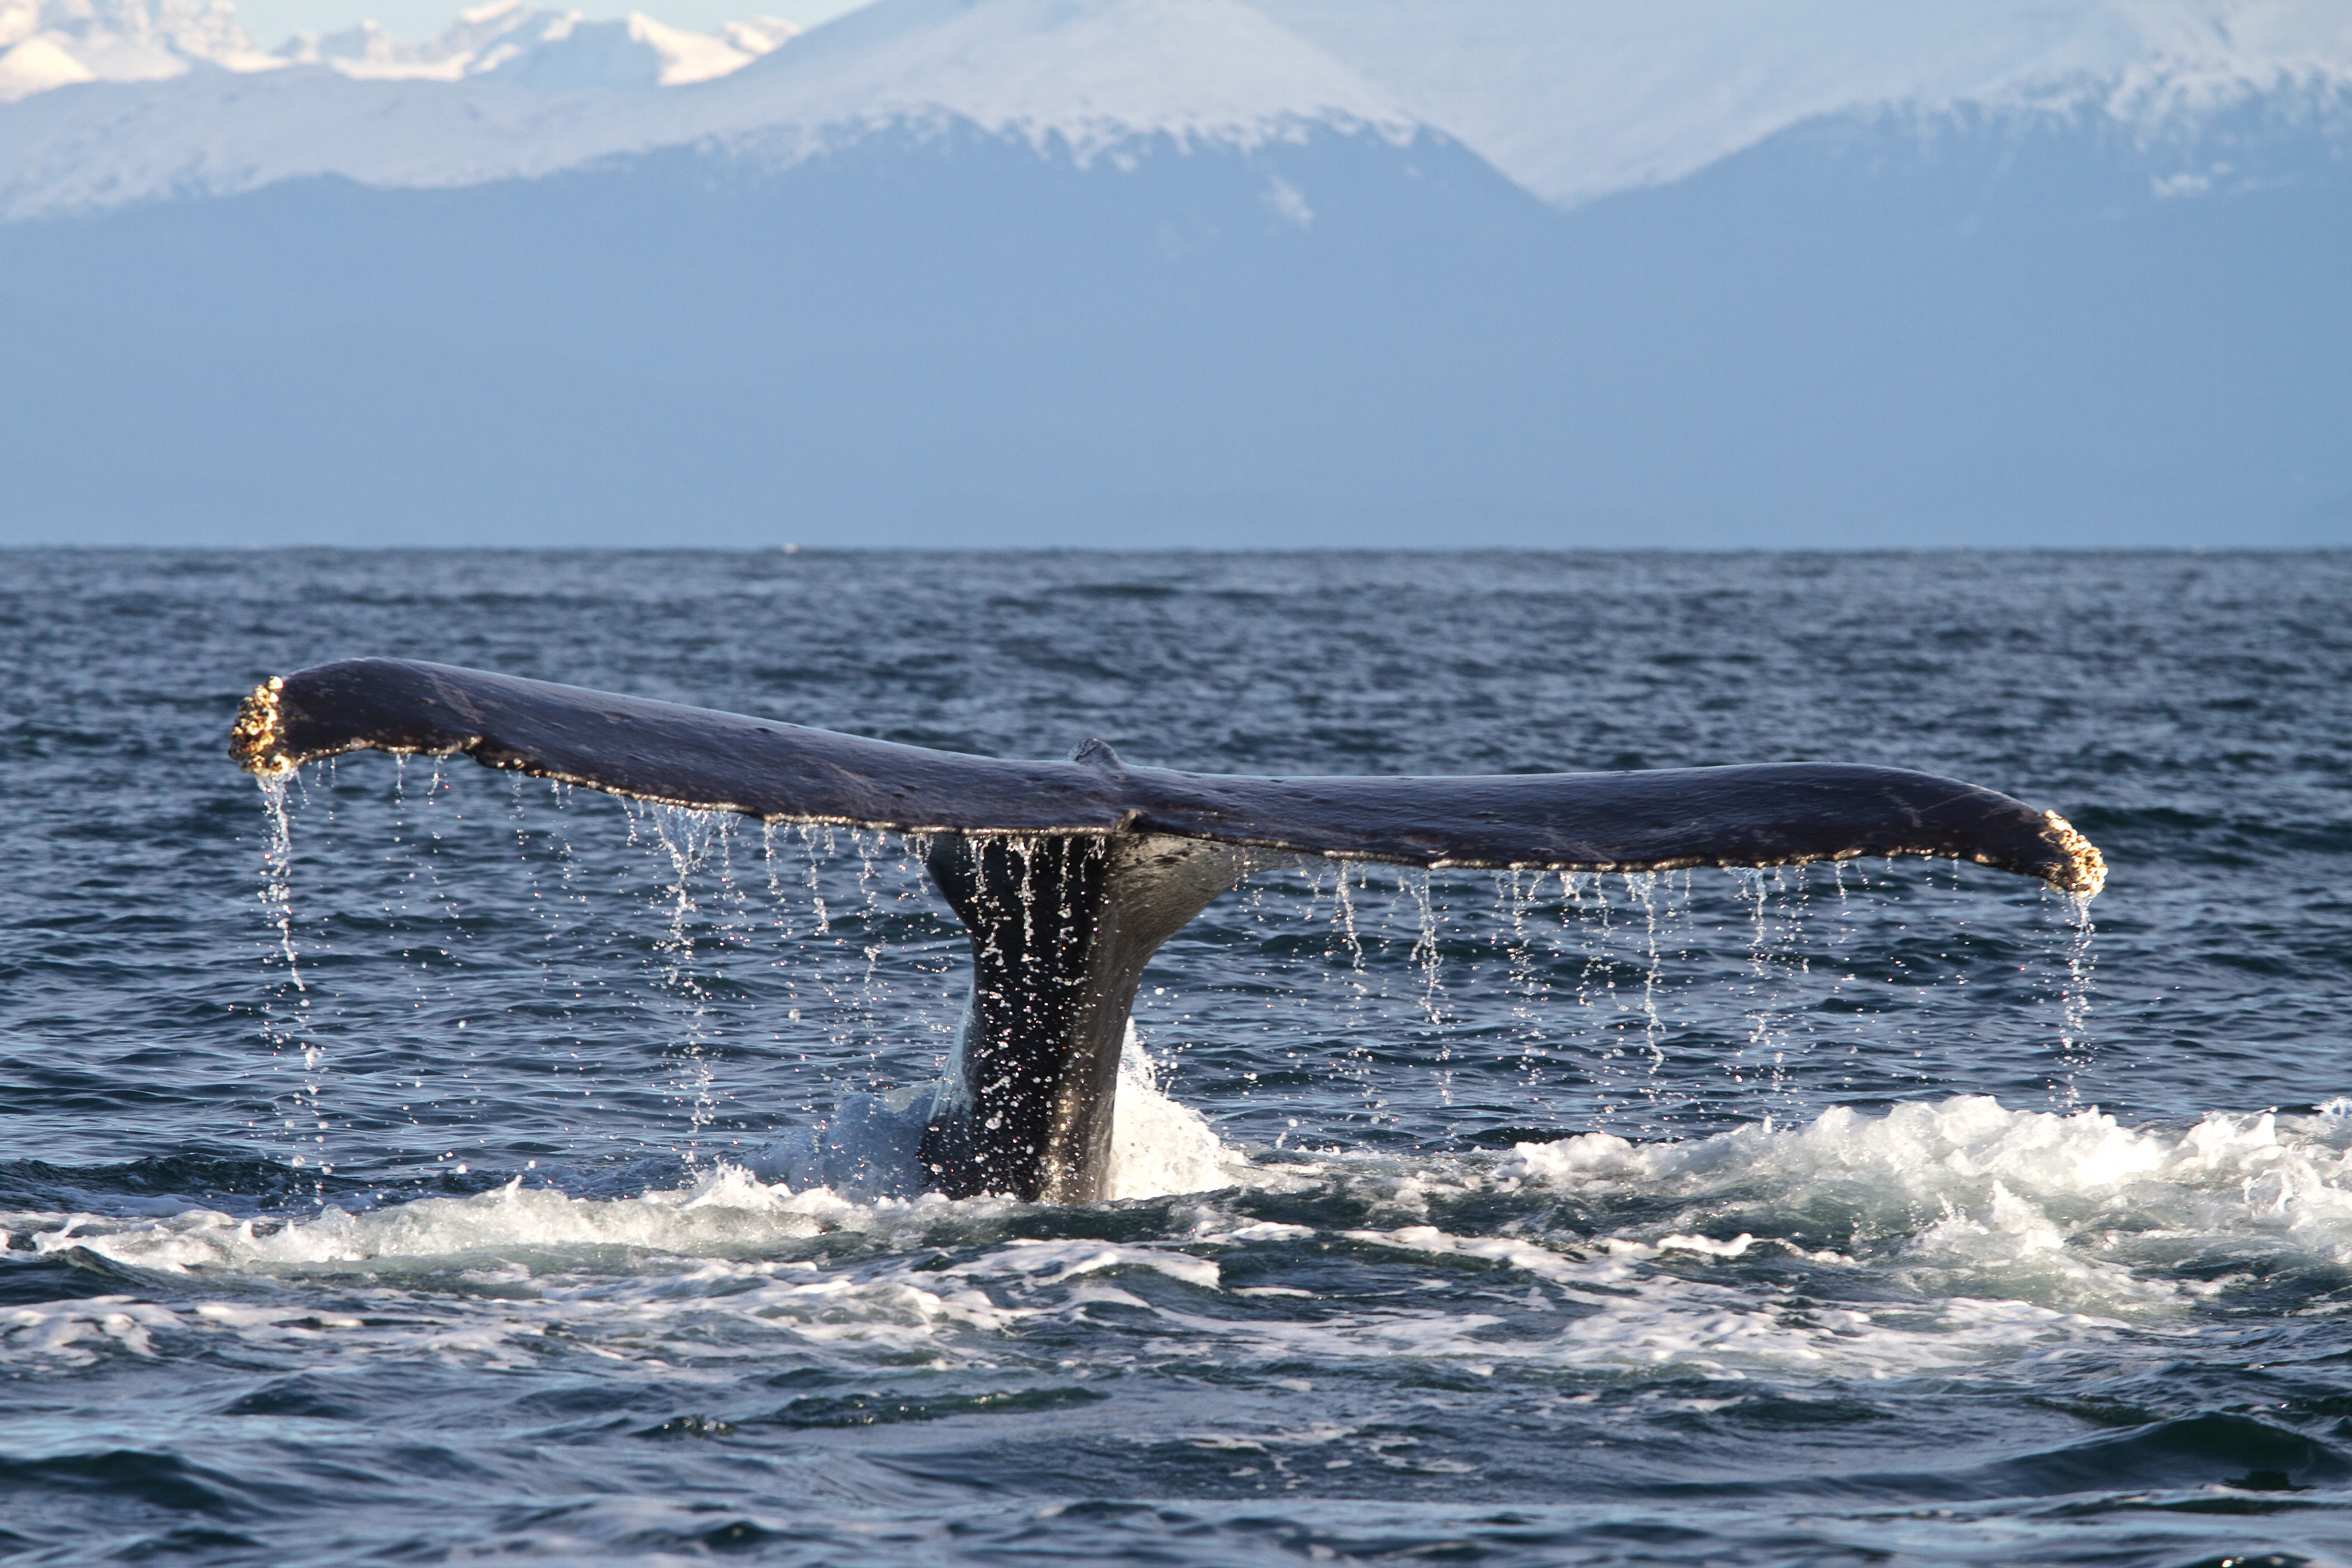 Photograph of humpback whale taken during Oregon State University Marine Mammal Institutes 2014 tagging field season in SE Alaska